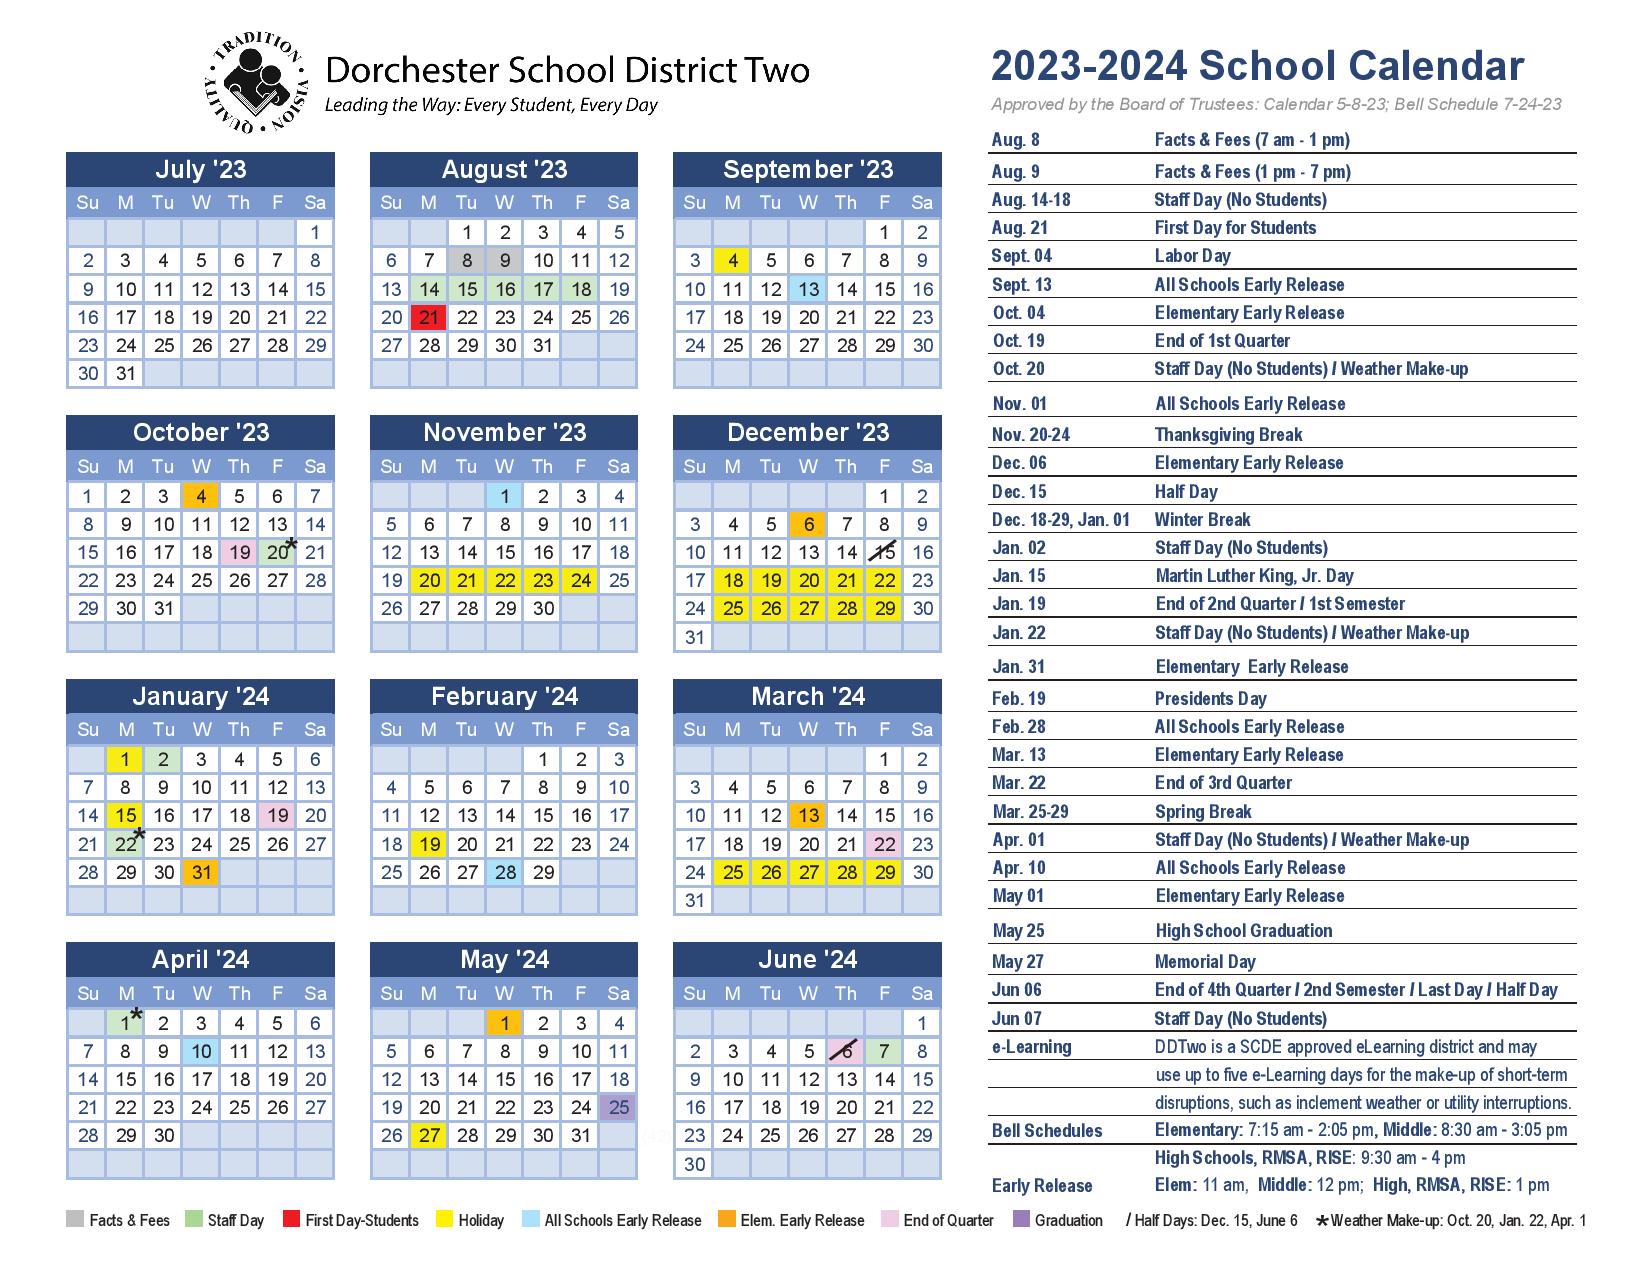 Dorchester School District 2 Calendar 20232024 in PDF